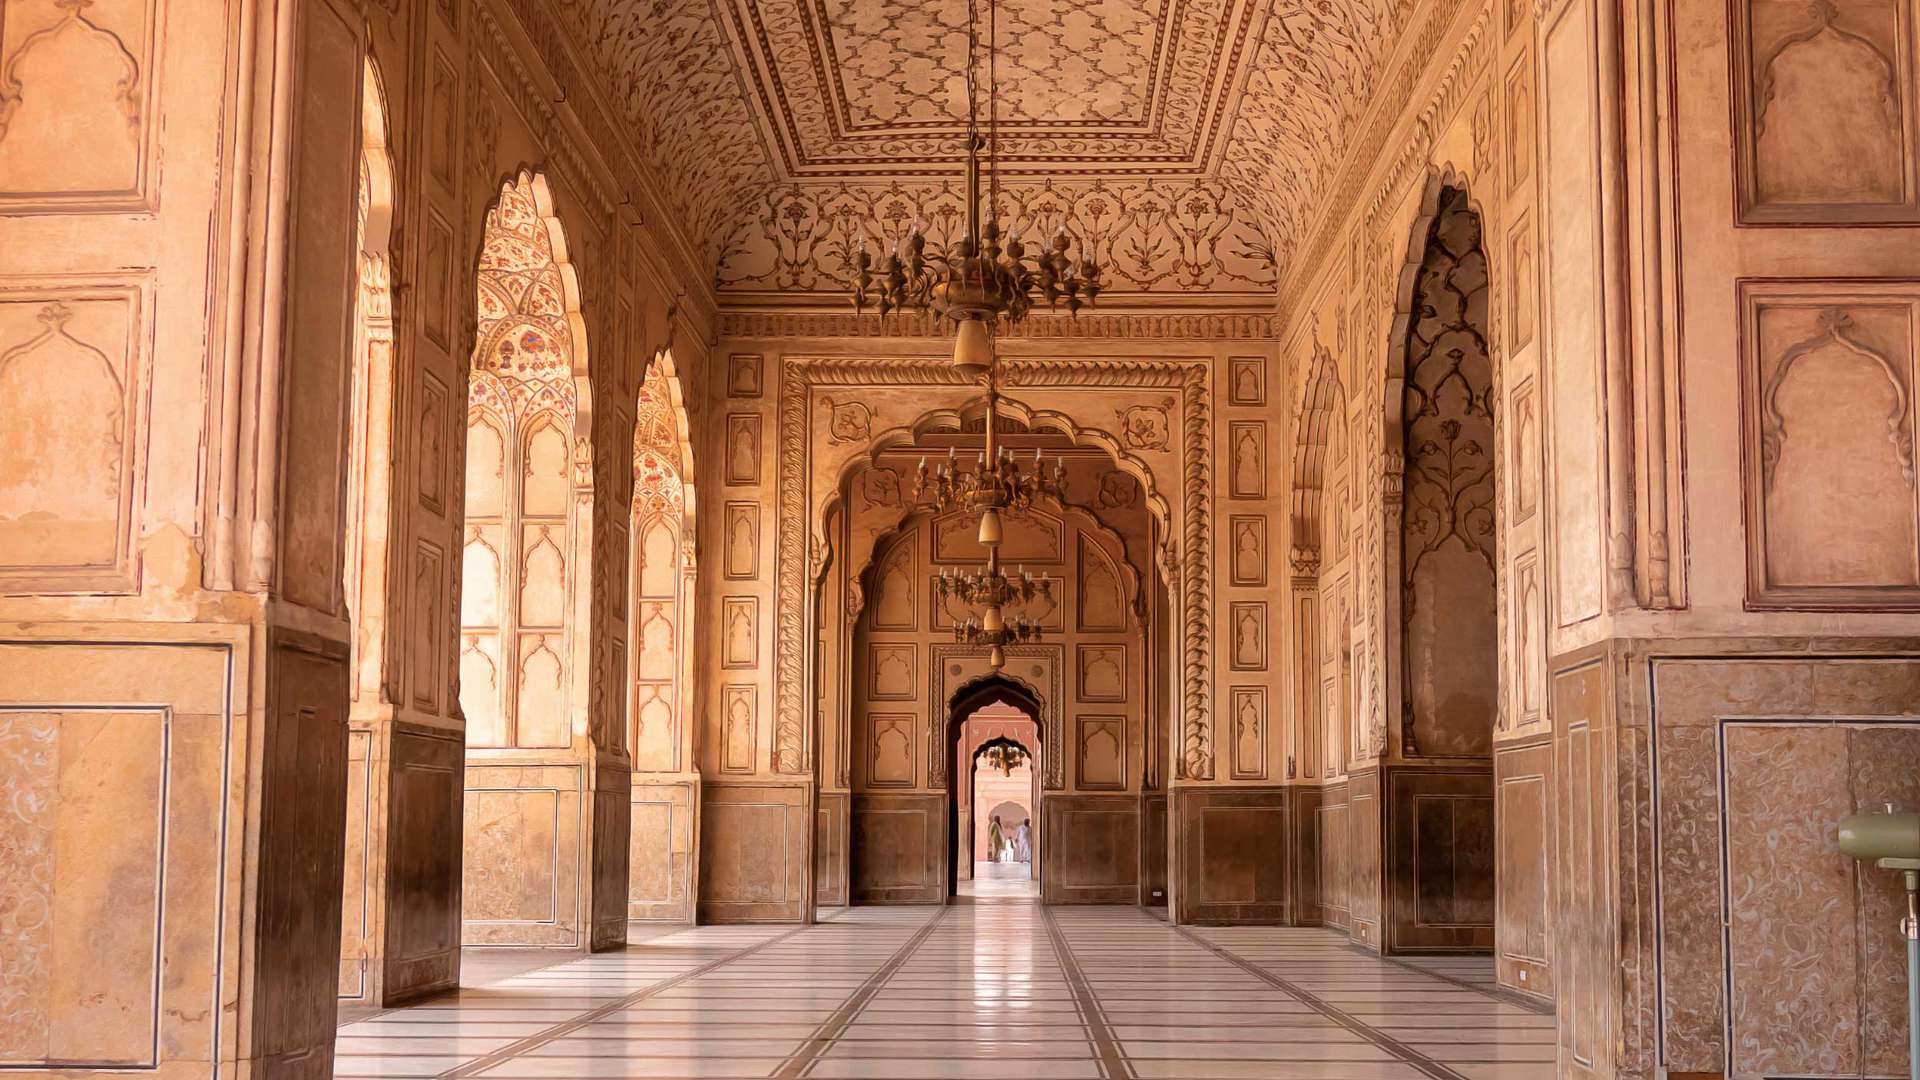 Badshahi Mosque, Lahore, Pakistan